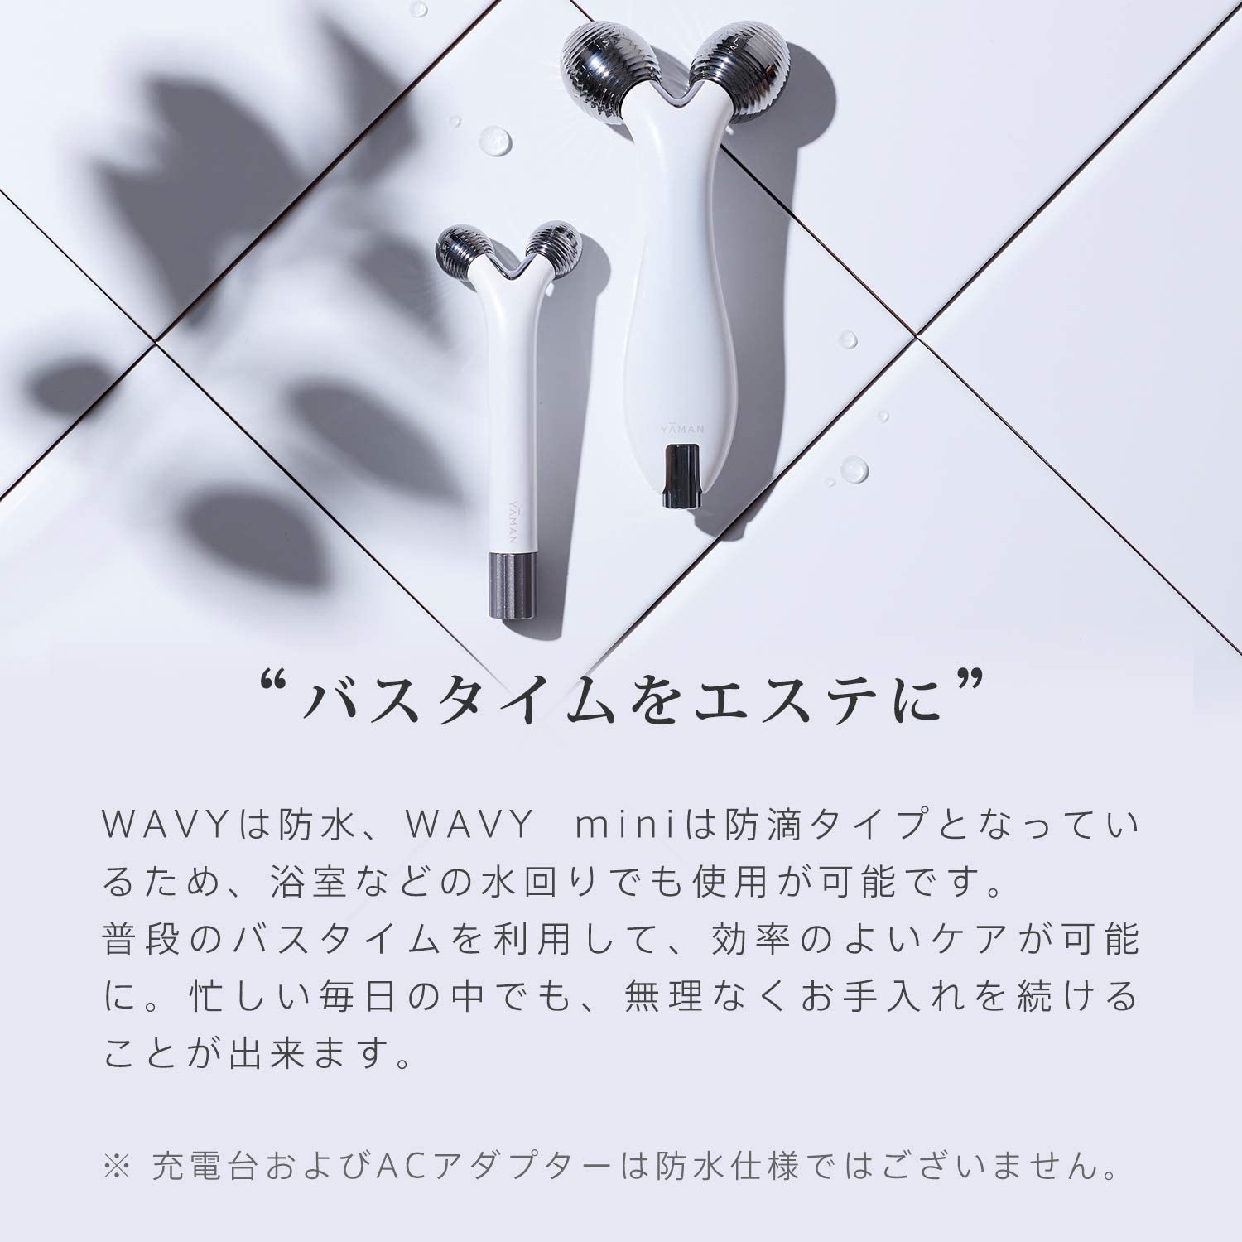 YA-MAN(ヤーマン) WAVY miniの商品画像サムネ11 